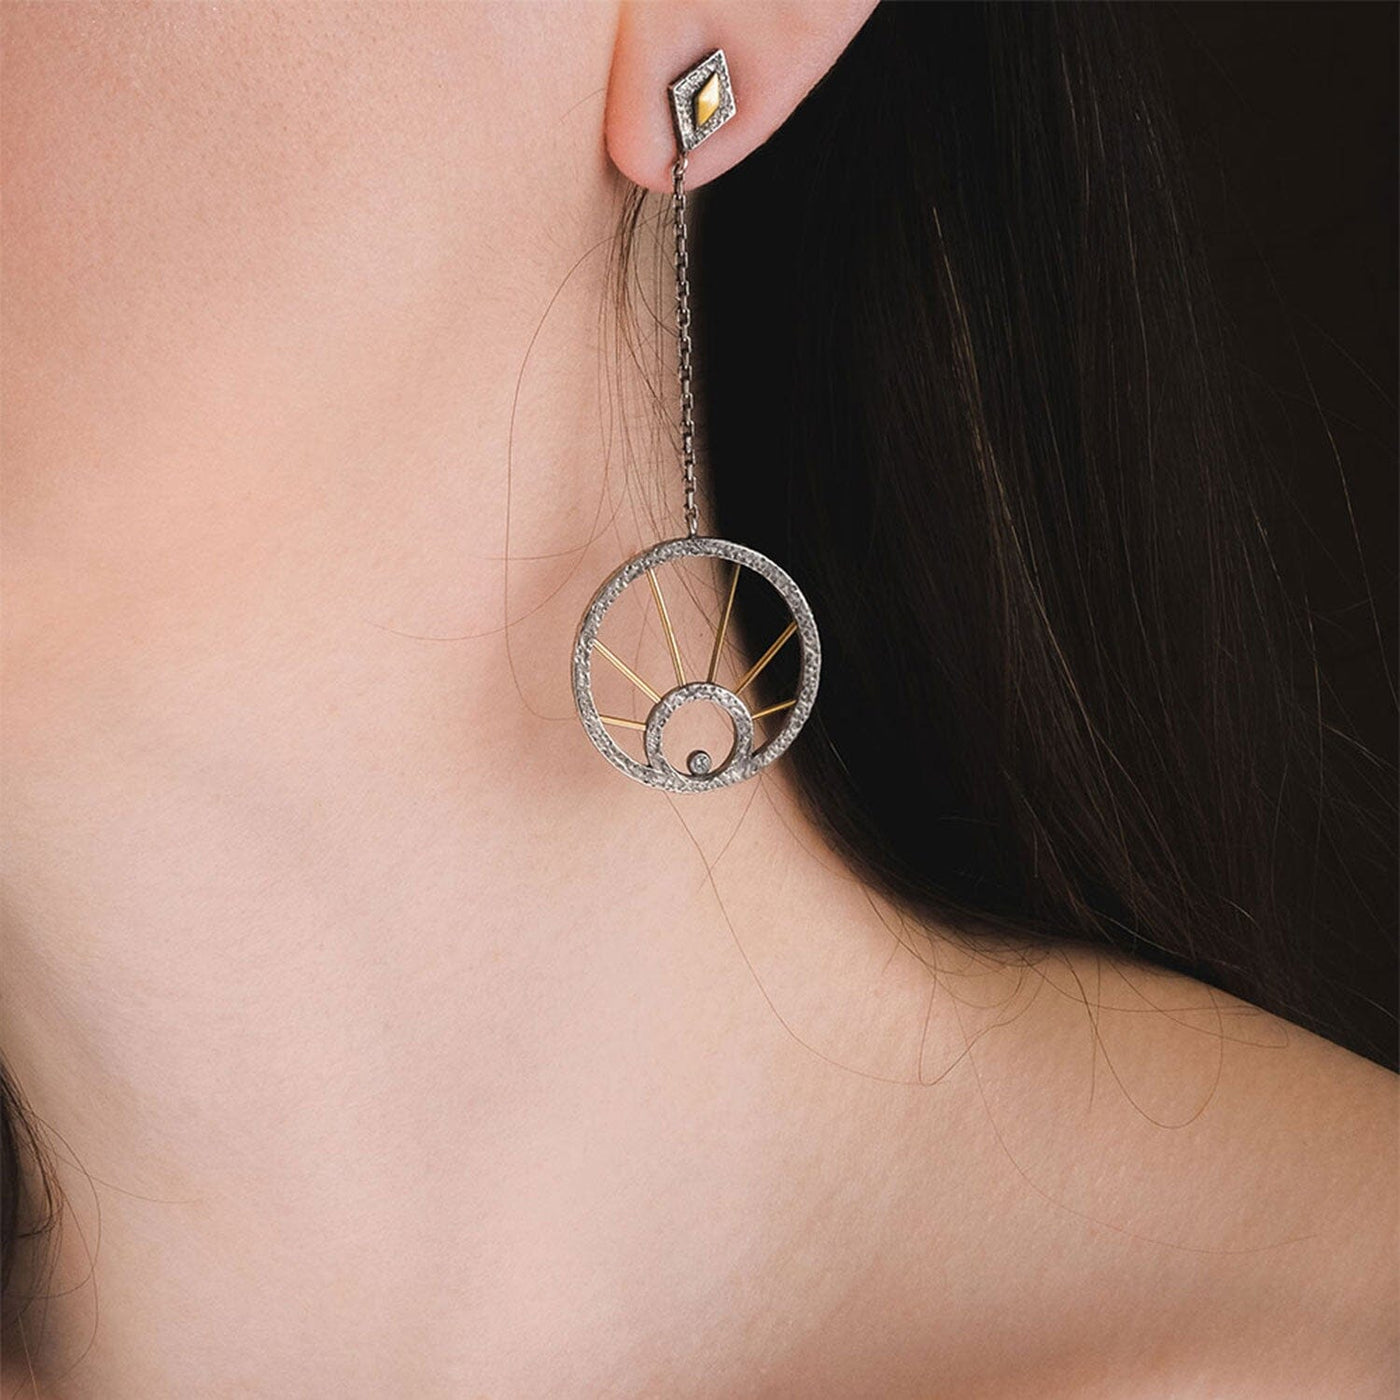 Circum Lucidum Earring Jewelry & Accesories Hoagard 